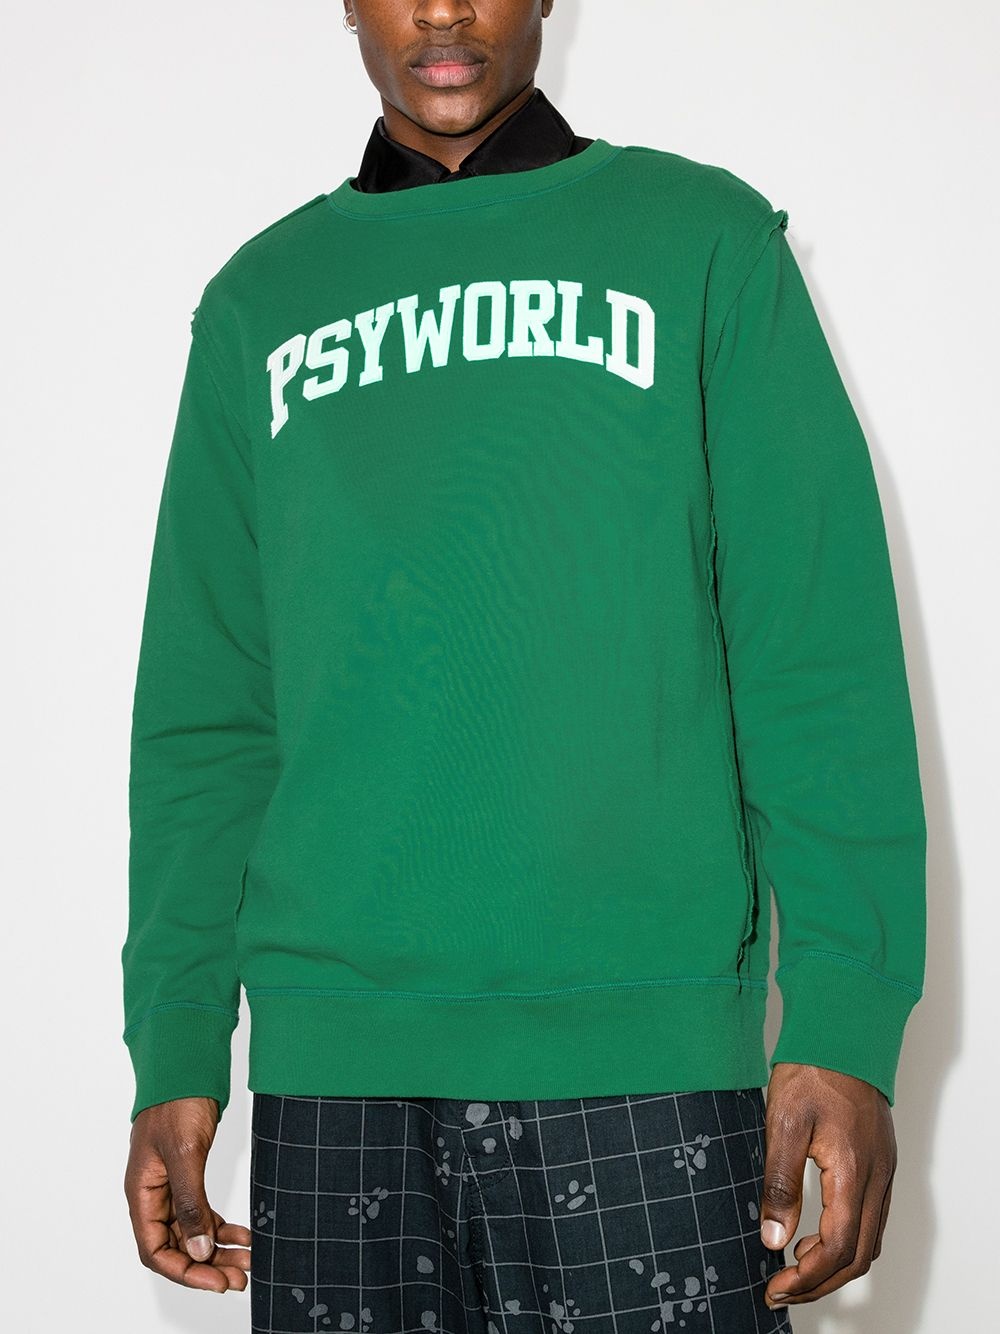 Psyworld crew-neck sweatshirt - 2